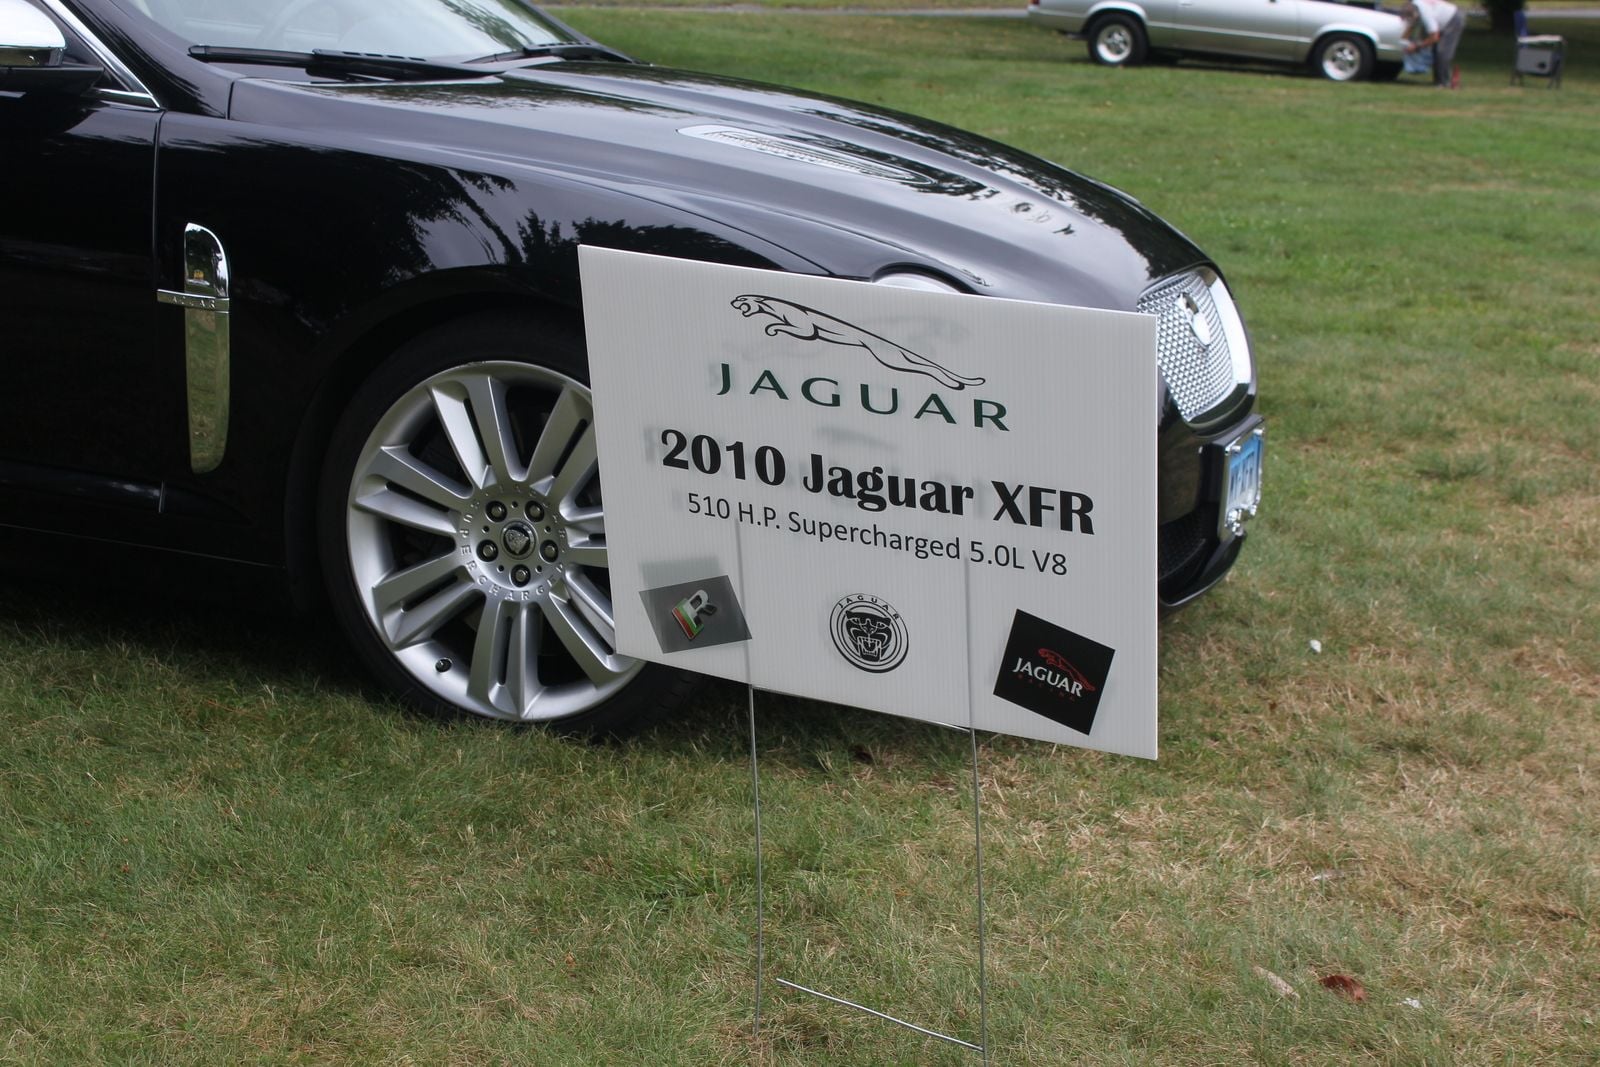 2010 Jaguar XFR - Gorgeous 2010 xfr f/s - Used - VIN SAJWA0JC5AMR59230 - 8 cyl - 2WD - Automatic - Sedan - Black - South Windsor, CT 06074, United States